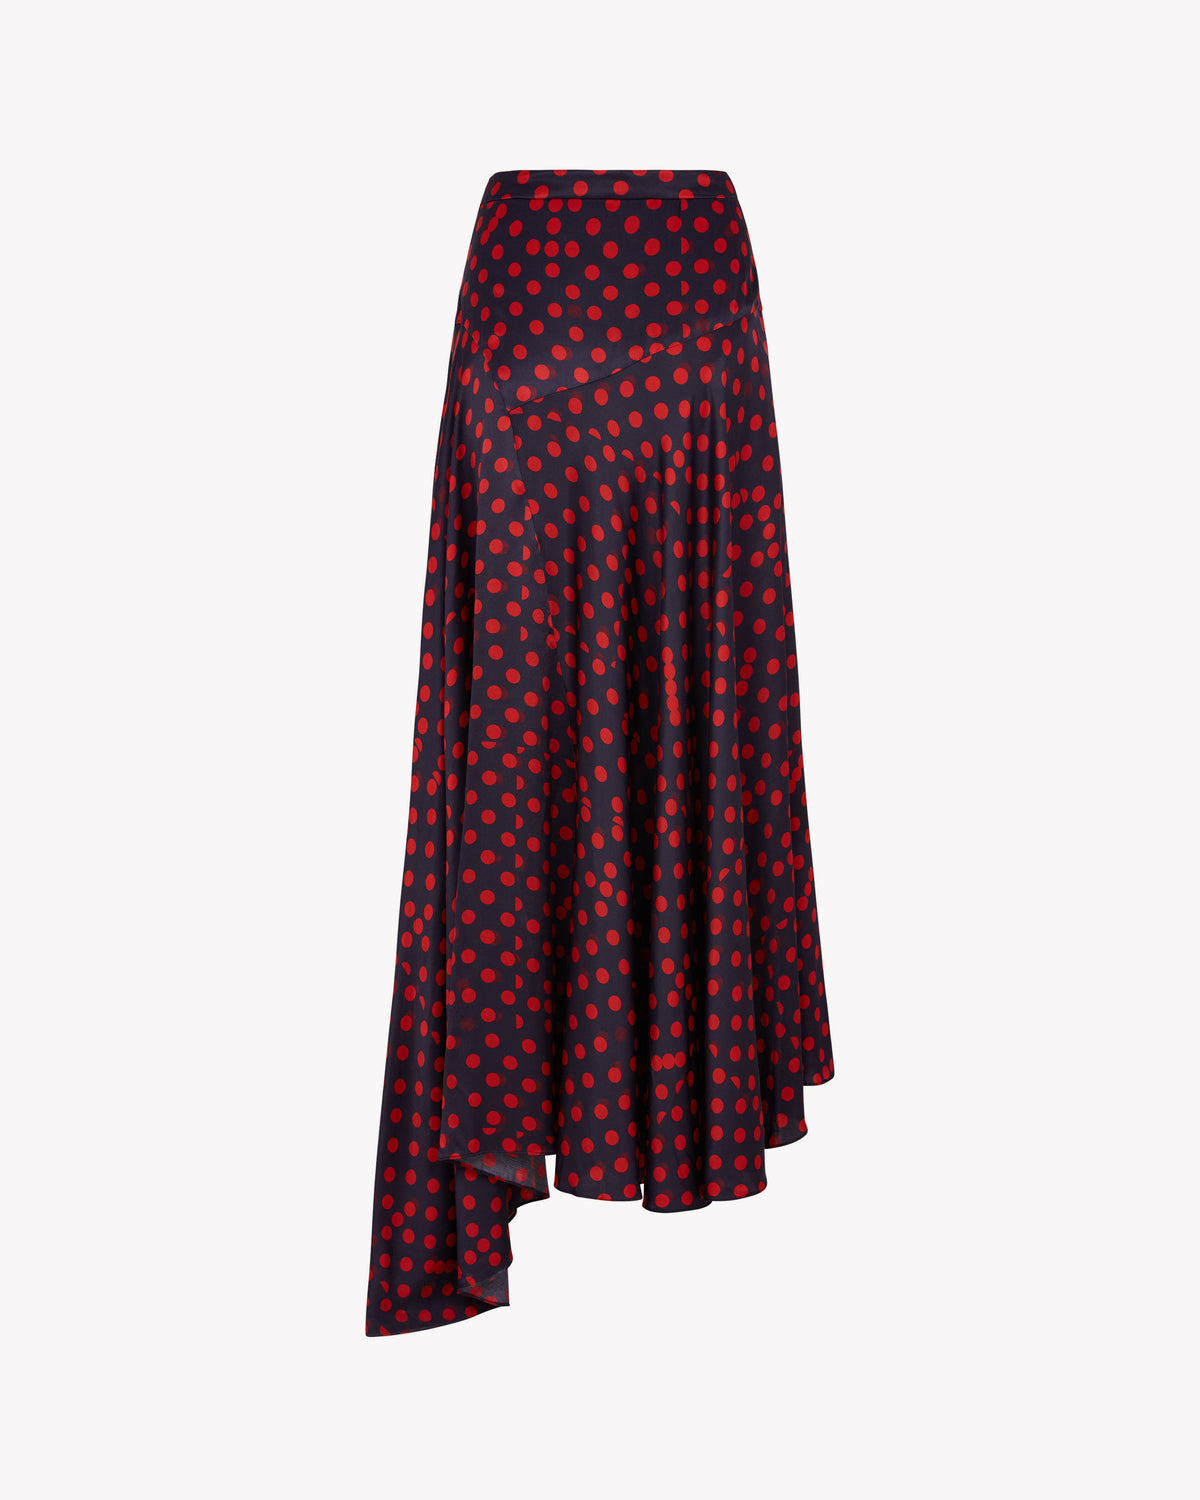 Graphic Polka Dot Asymmetric Maxi Skirt - Navy/Red SERENA BUTE